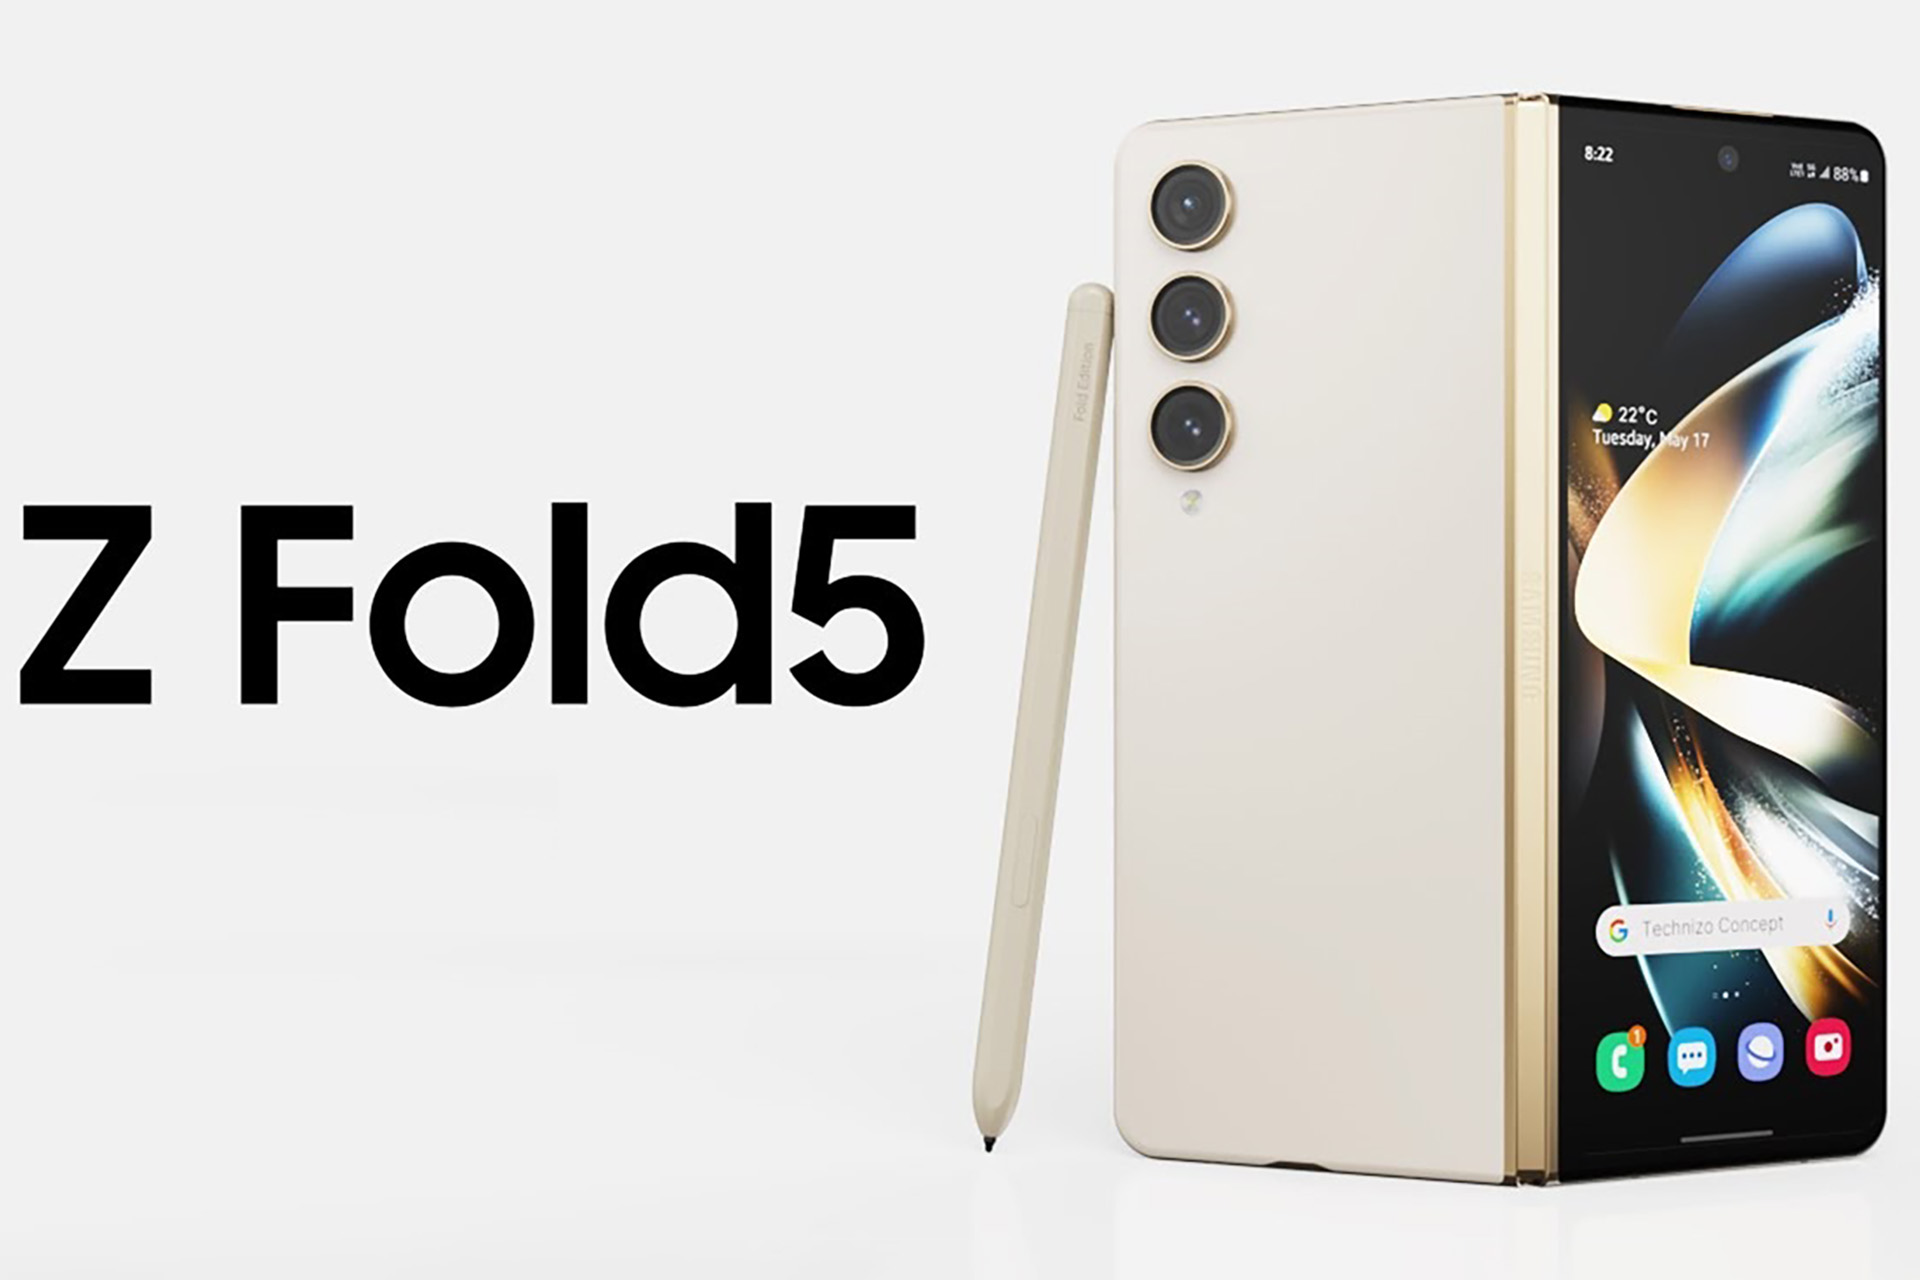 Samsung Galaxy Z Fold5 Specification sheet is leaked